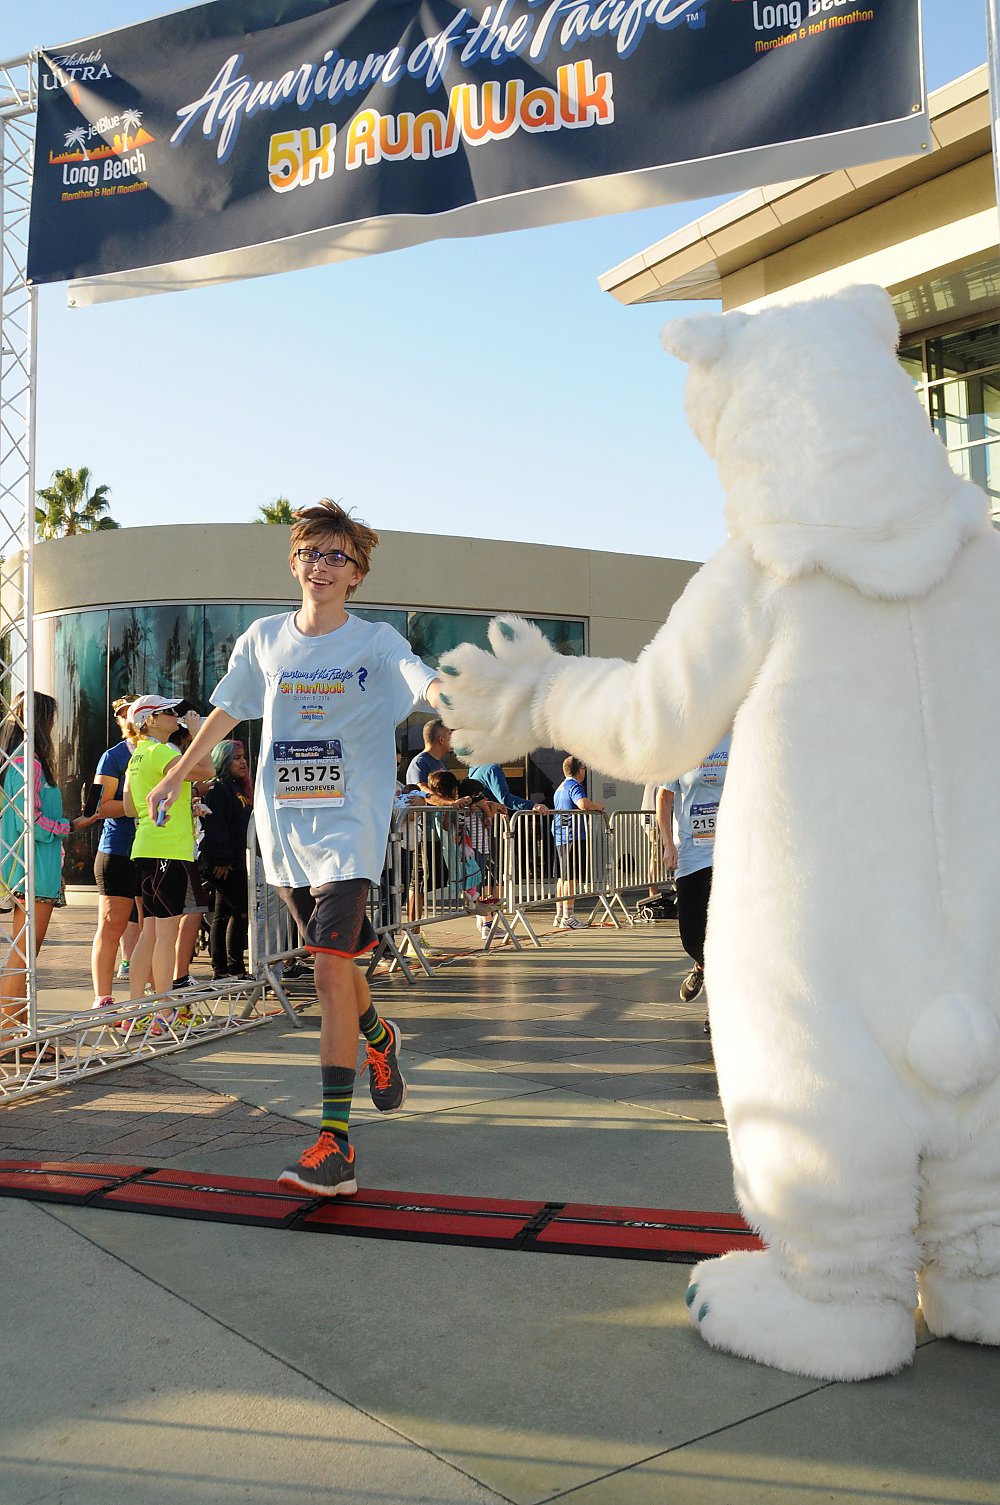 Aquarium polar bear mascot high-fiving a 5k runner as they finish the race